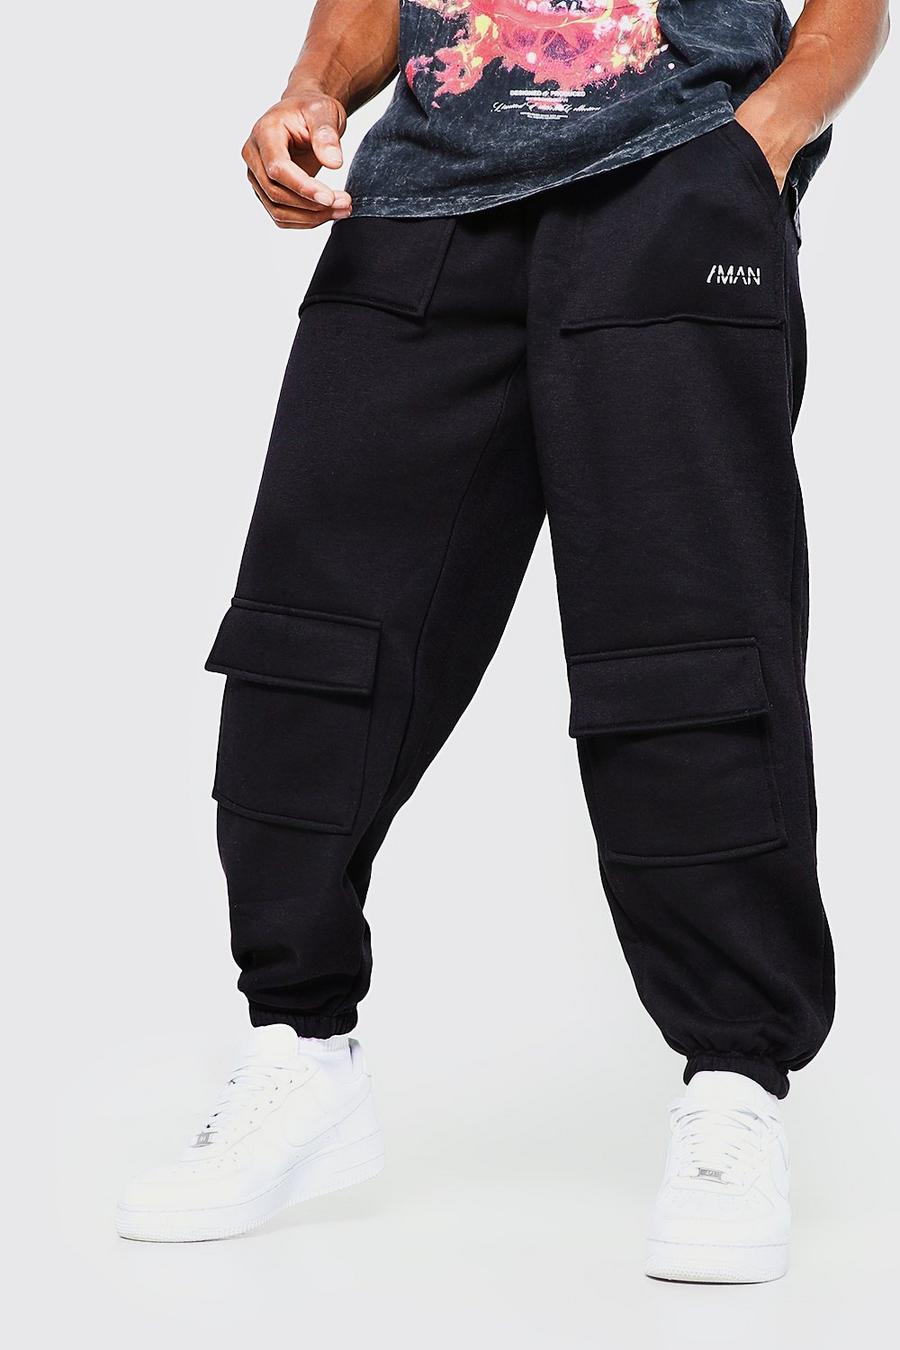 Pantaloni tuta oversize Original Man con tasche Utility, Black nero image number 1